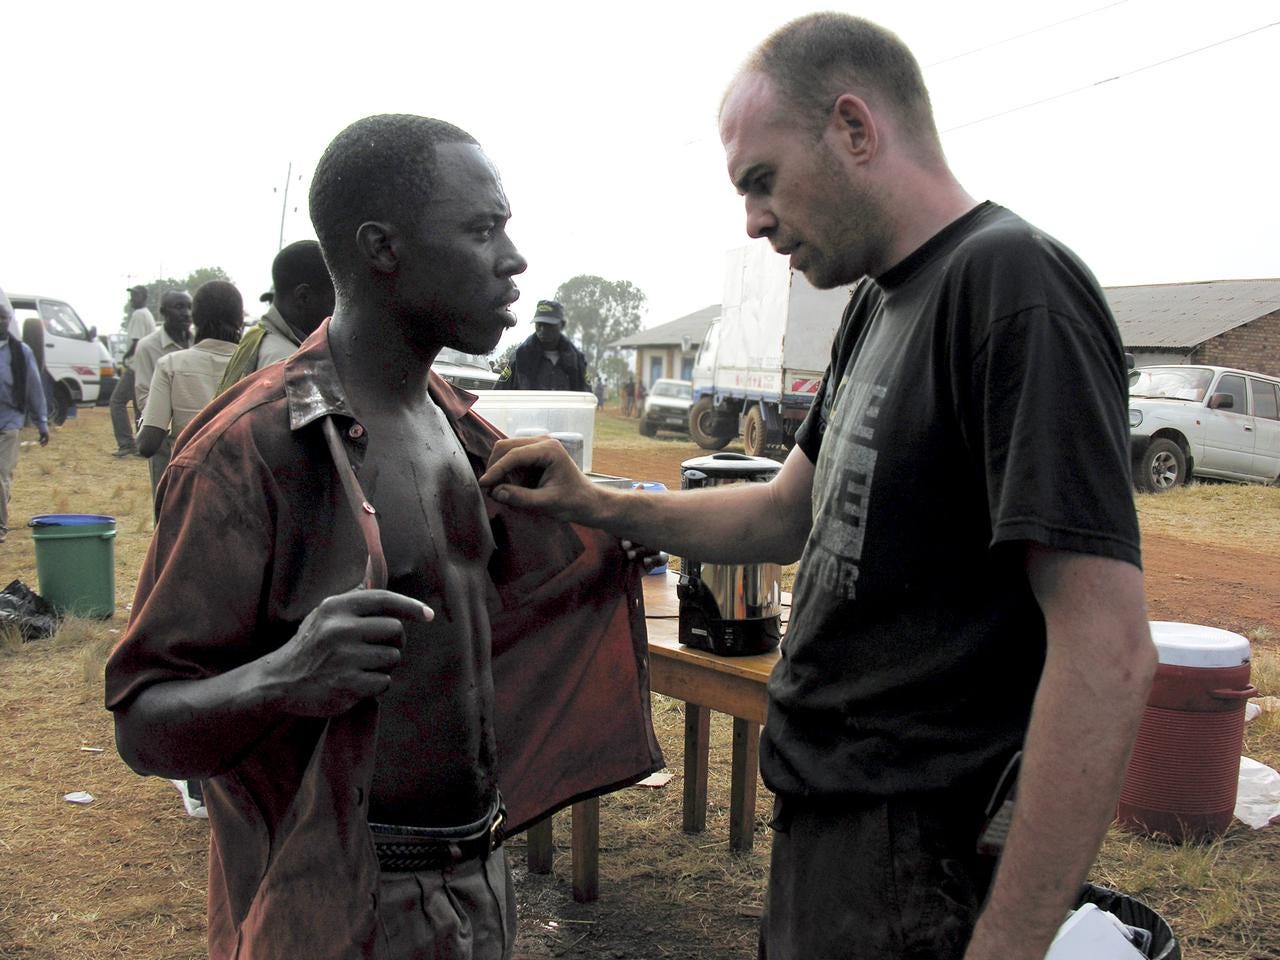 A.S. Hamilton applies makeup to an actor on set in Rwanda.